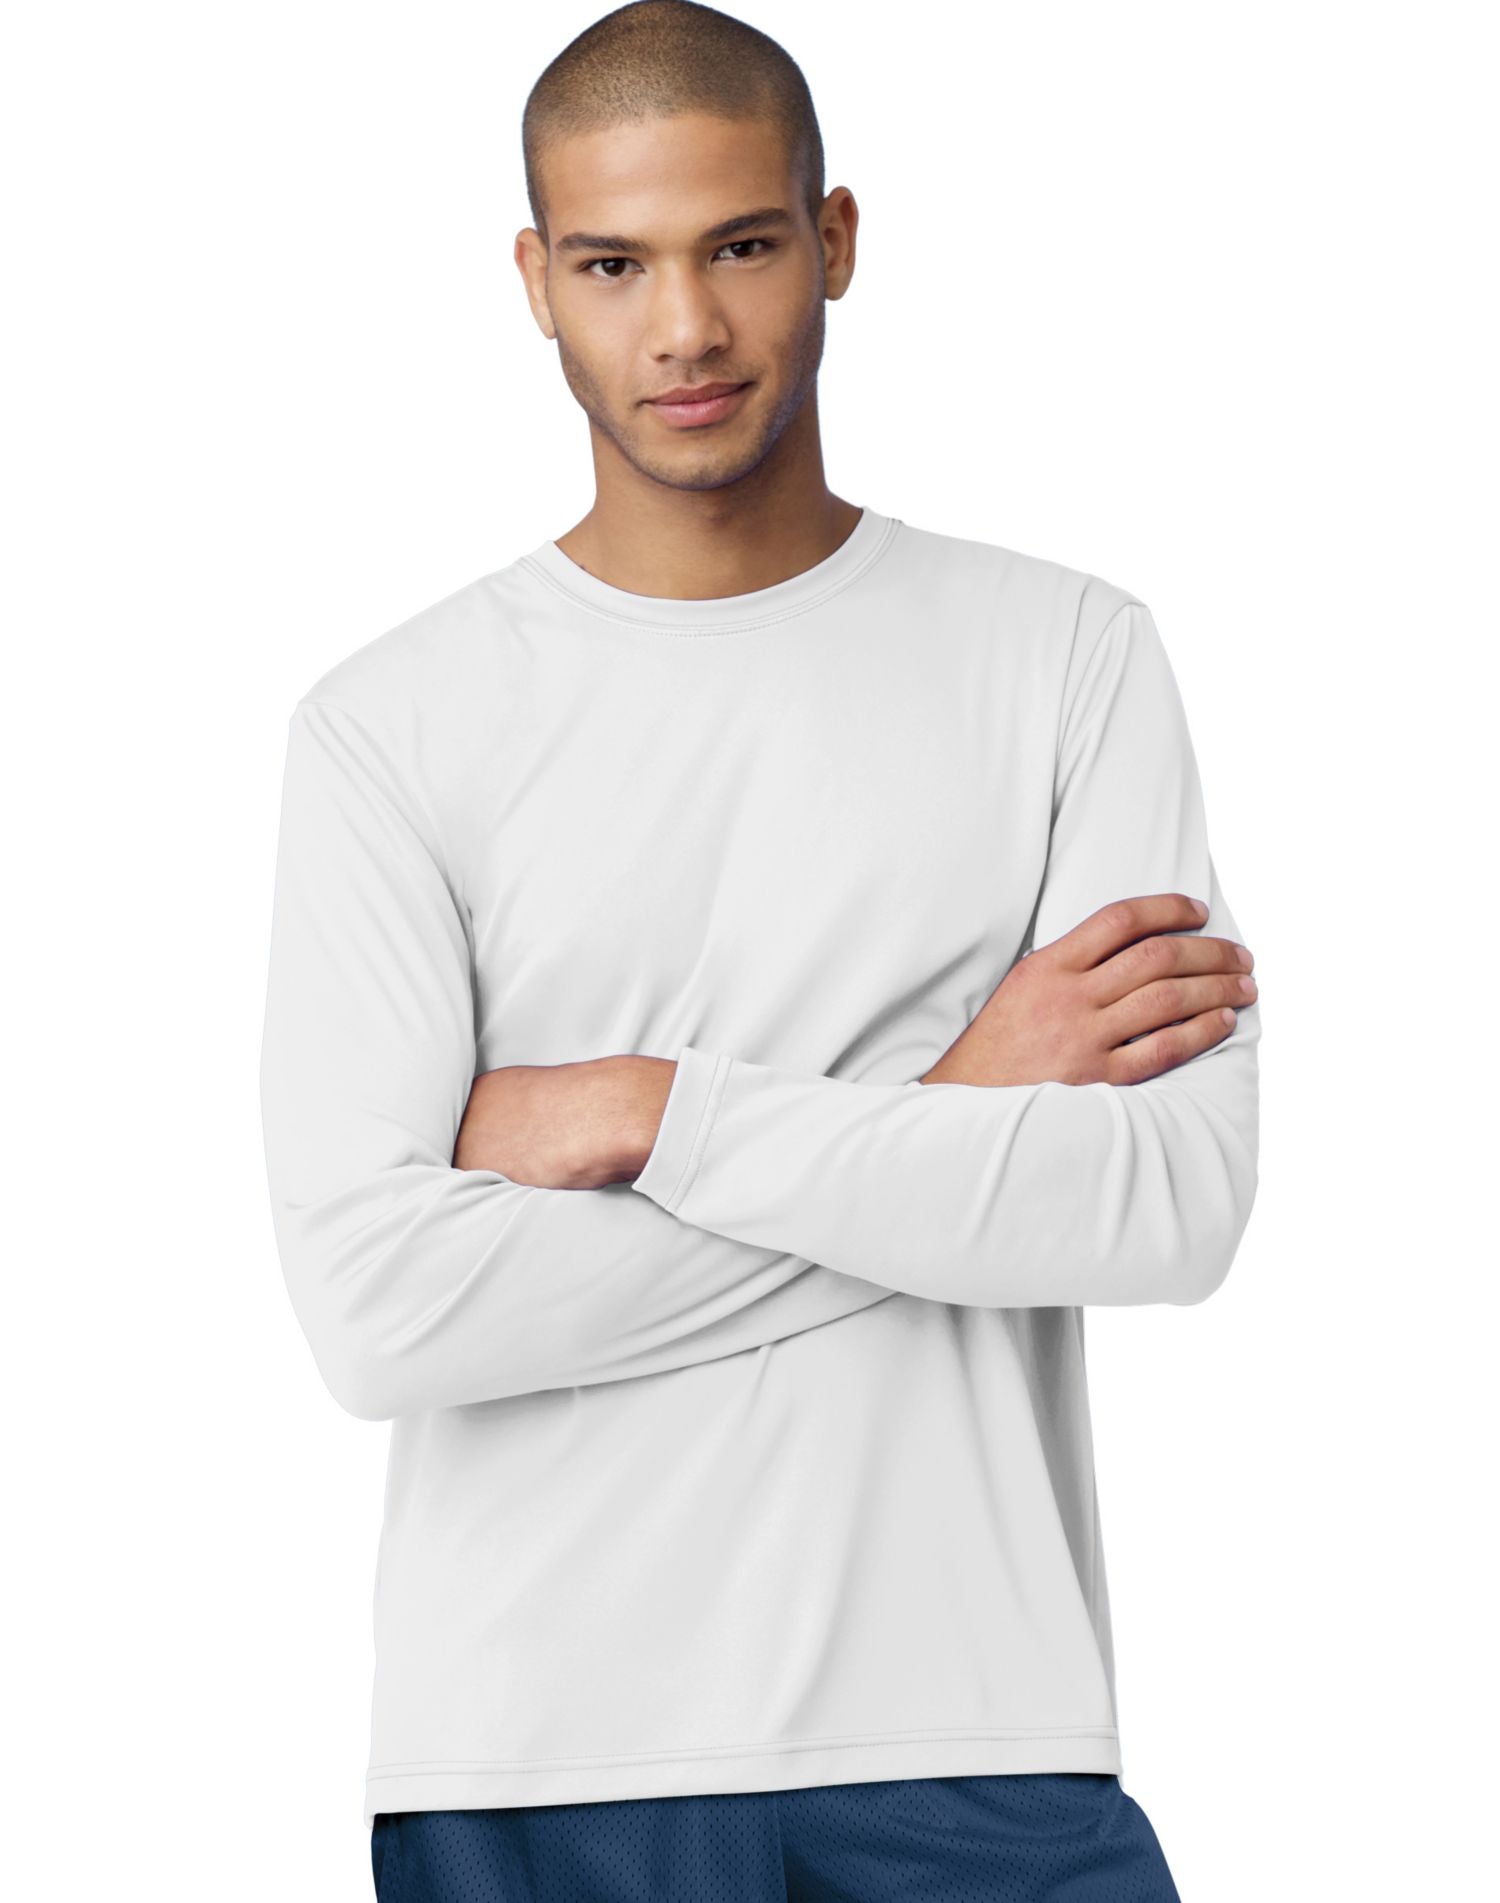 482L - Hanes Men’s Cool Dri Long Sleeve Performance T-Shirt